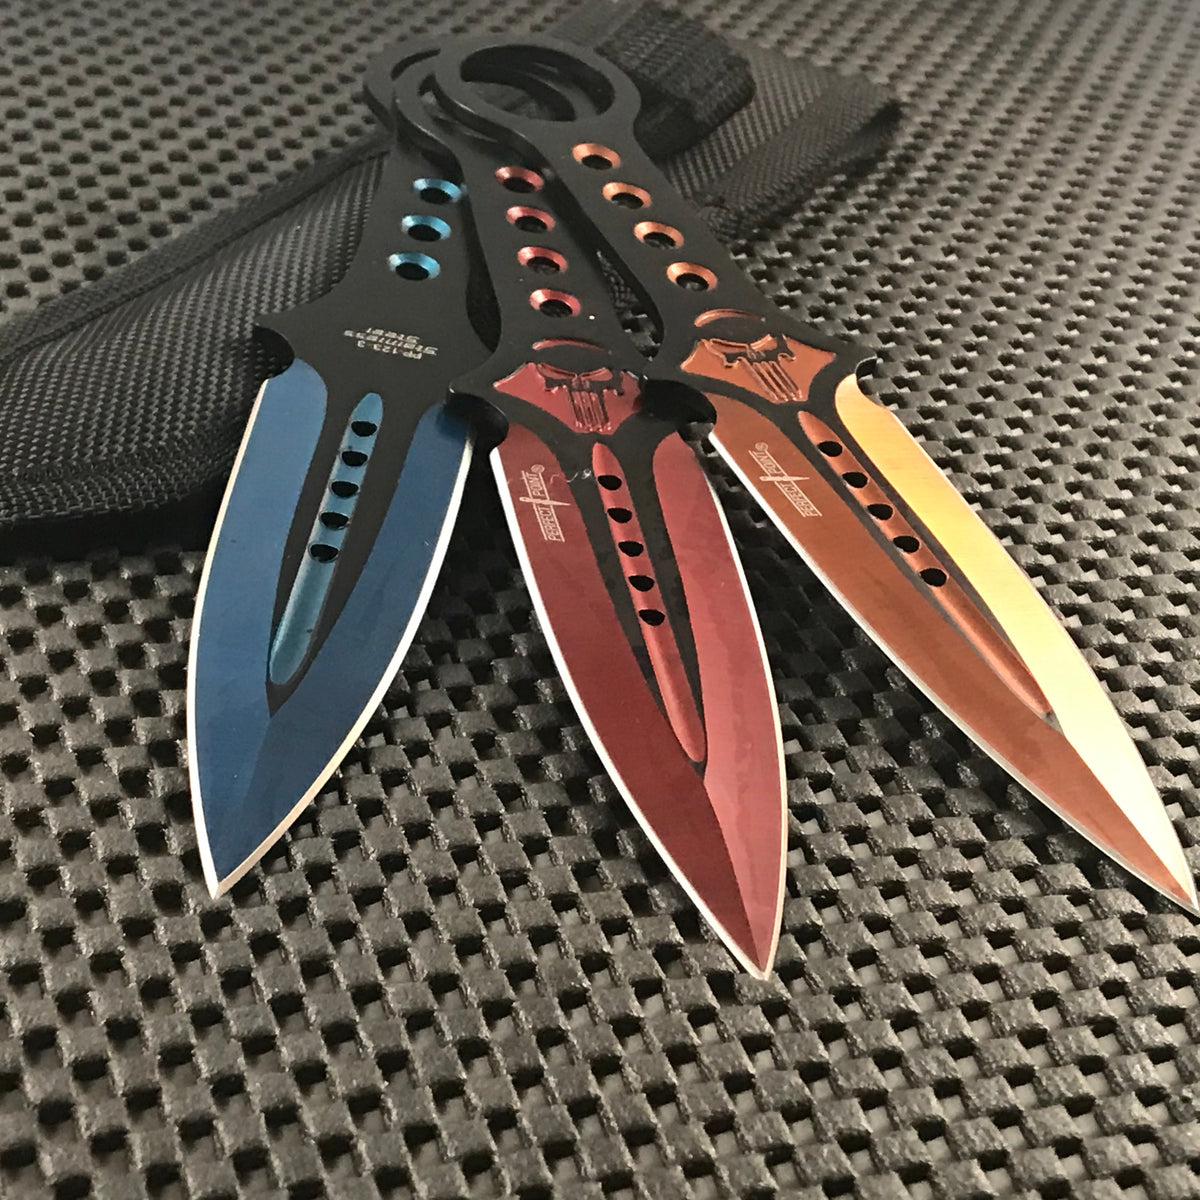 Assassin Unity Knives - Set of Three - Foam Throwing Knives